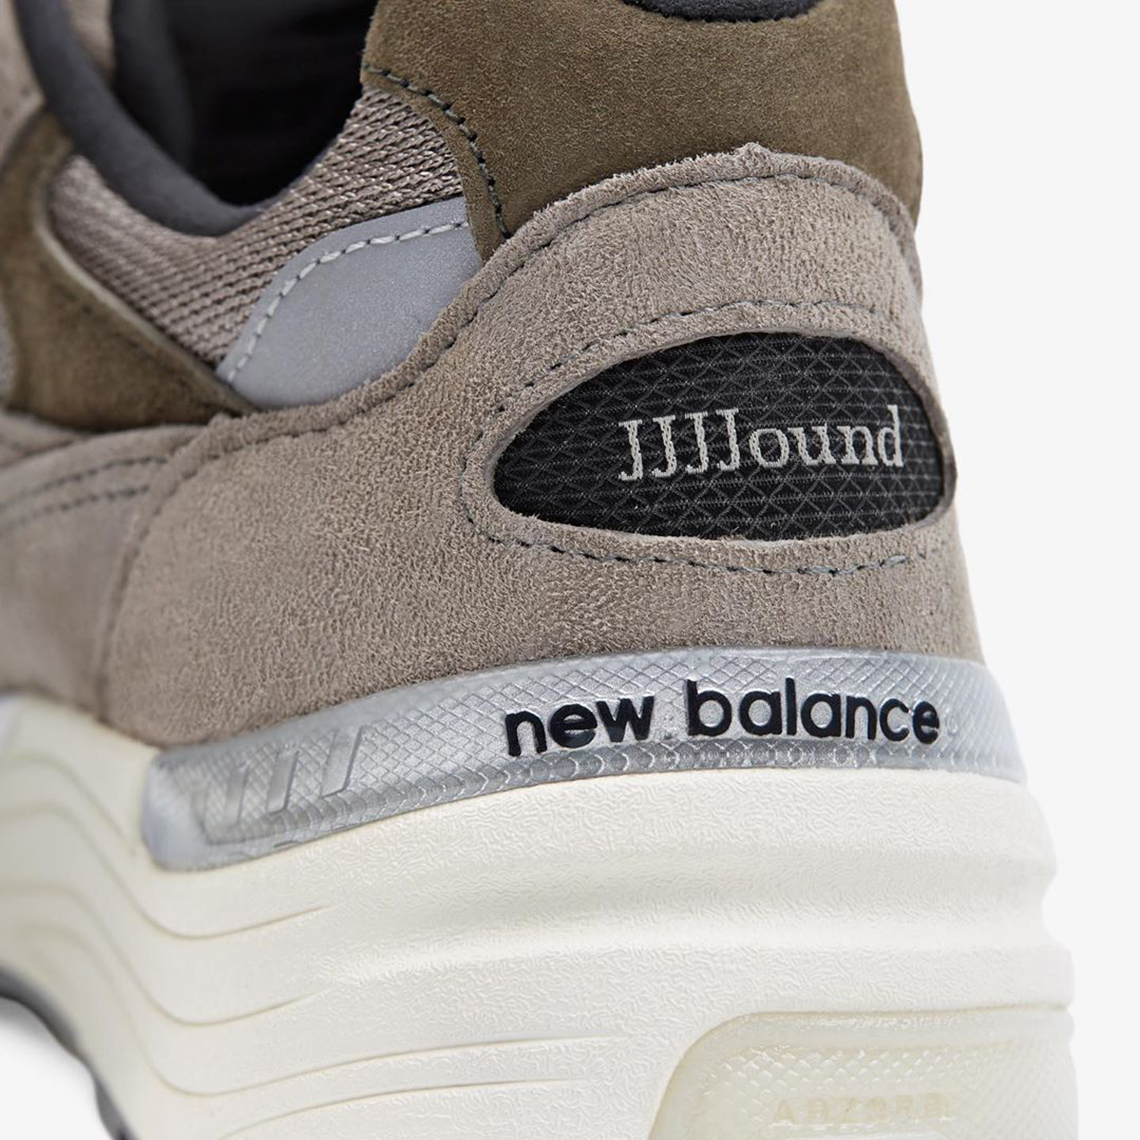 jjjjound new balance for sale